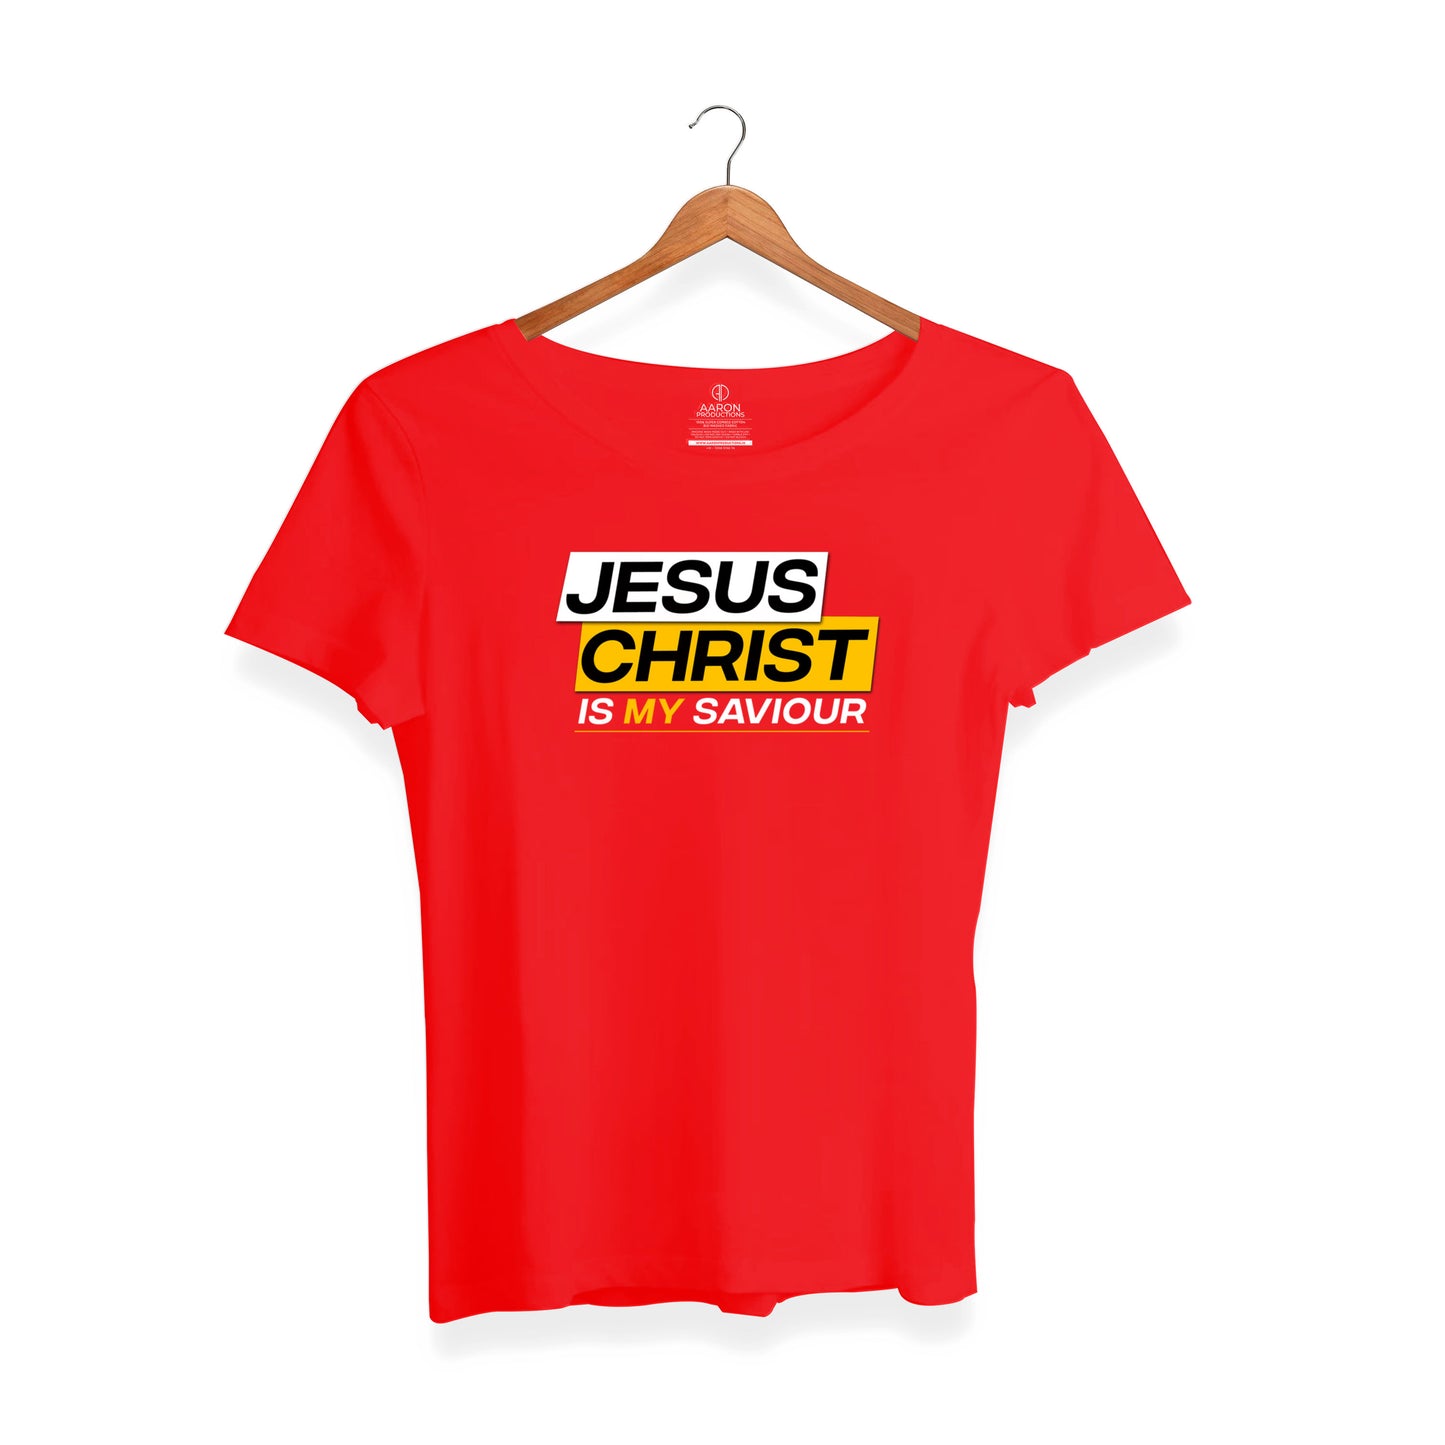 Jesus Christ is my Saviour - Women tshirt